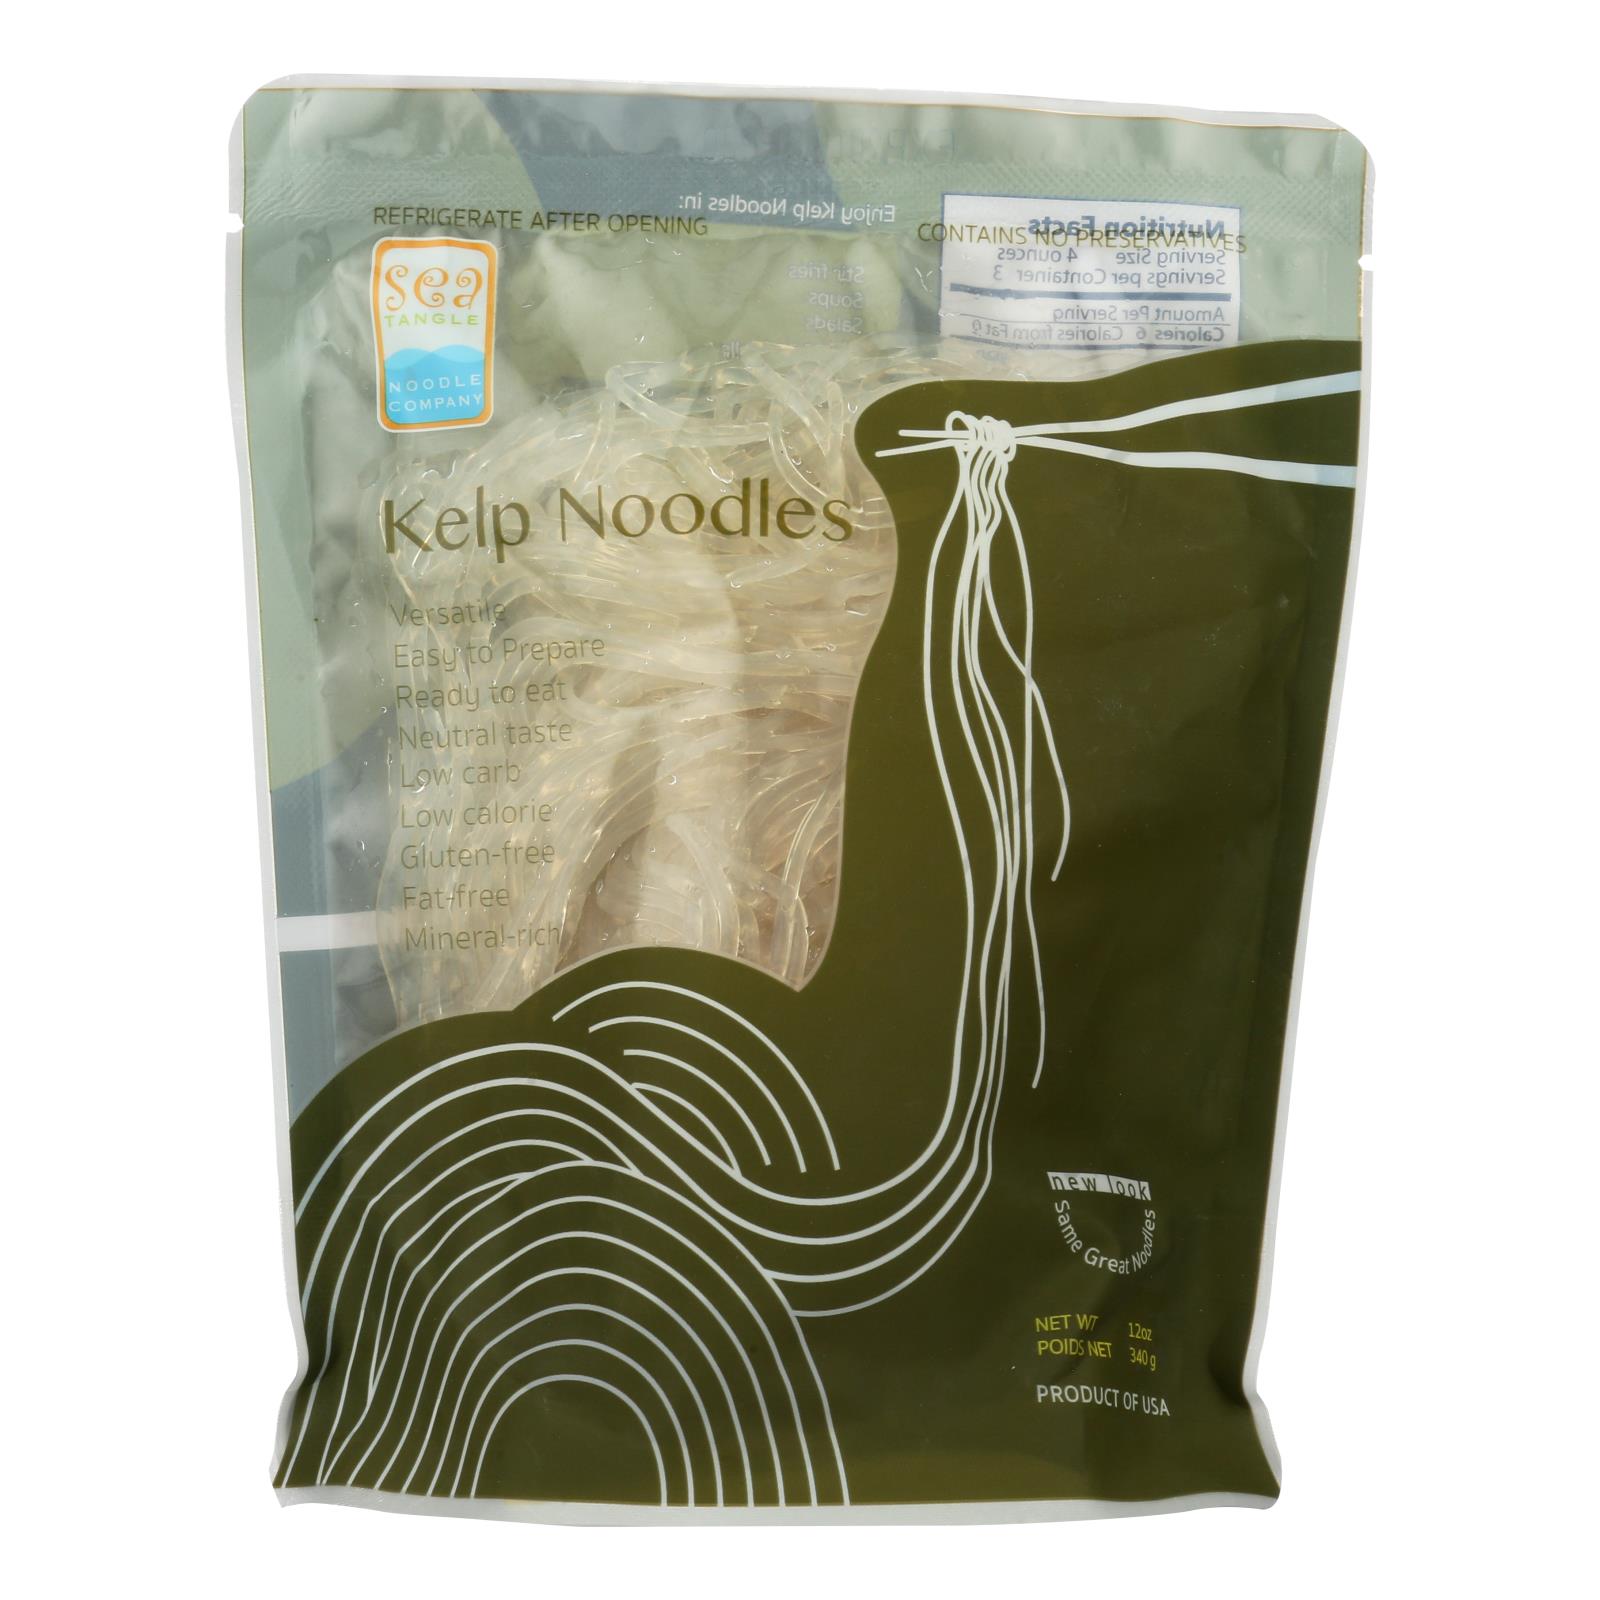 Sea Tangle Noodle Company Kelp Noodles - 12개 묶음상품 - 12 OZ